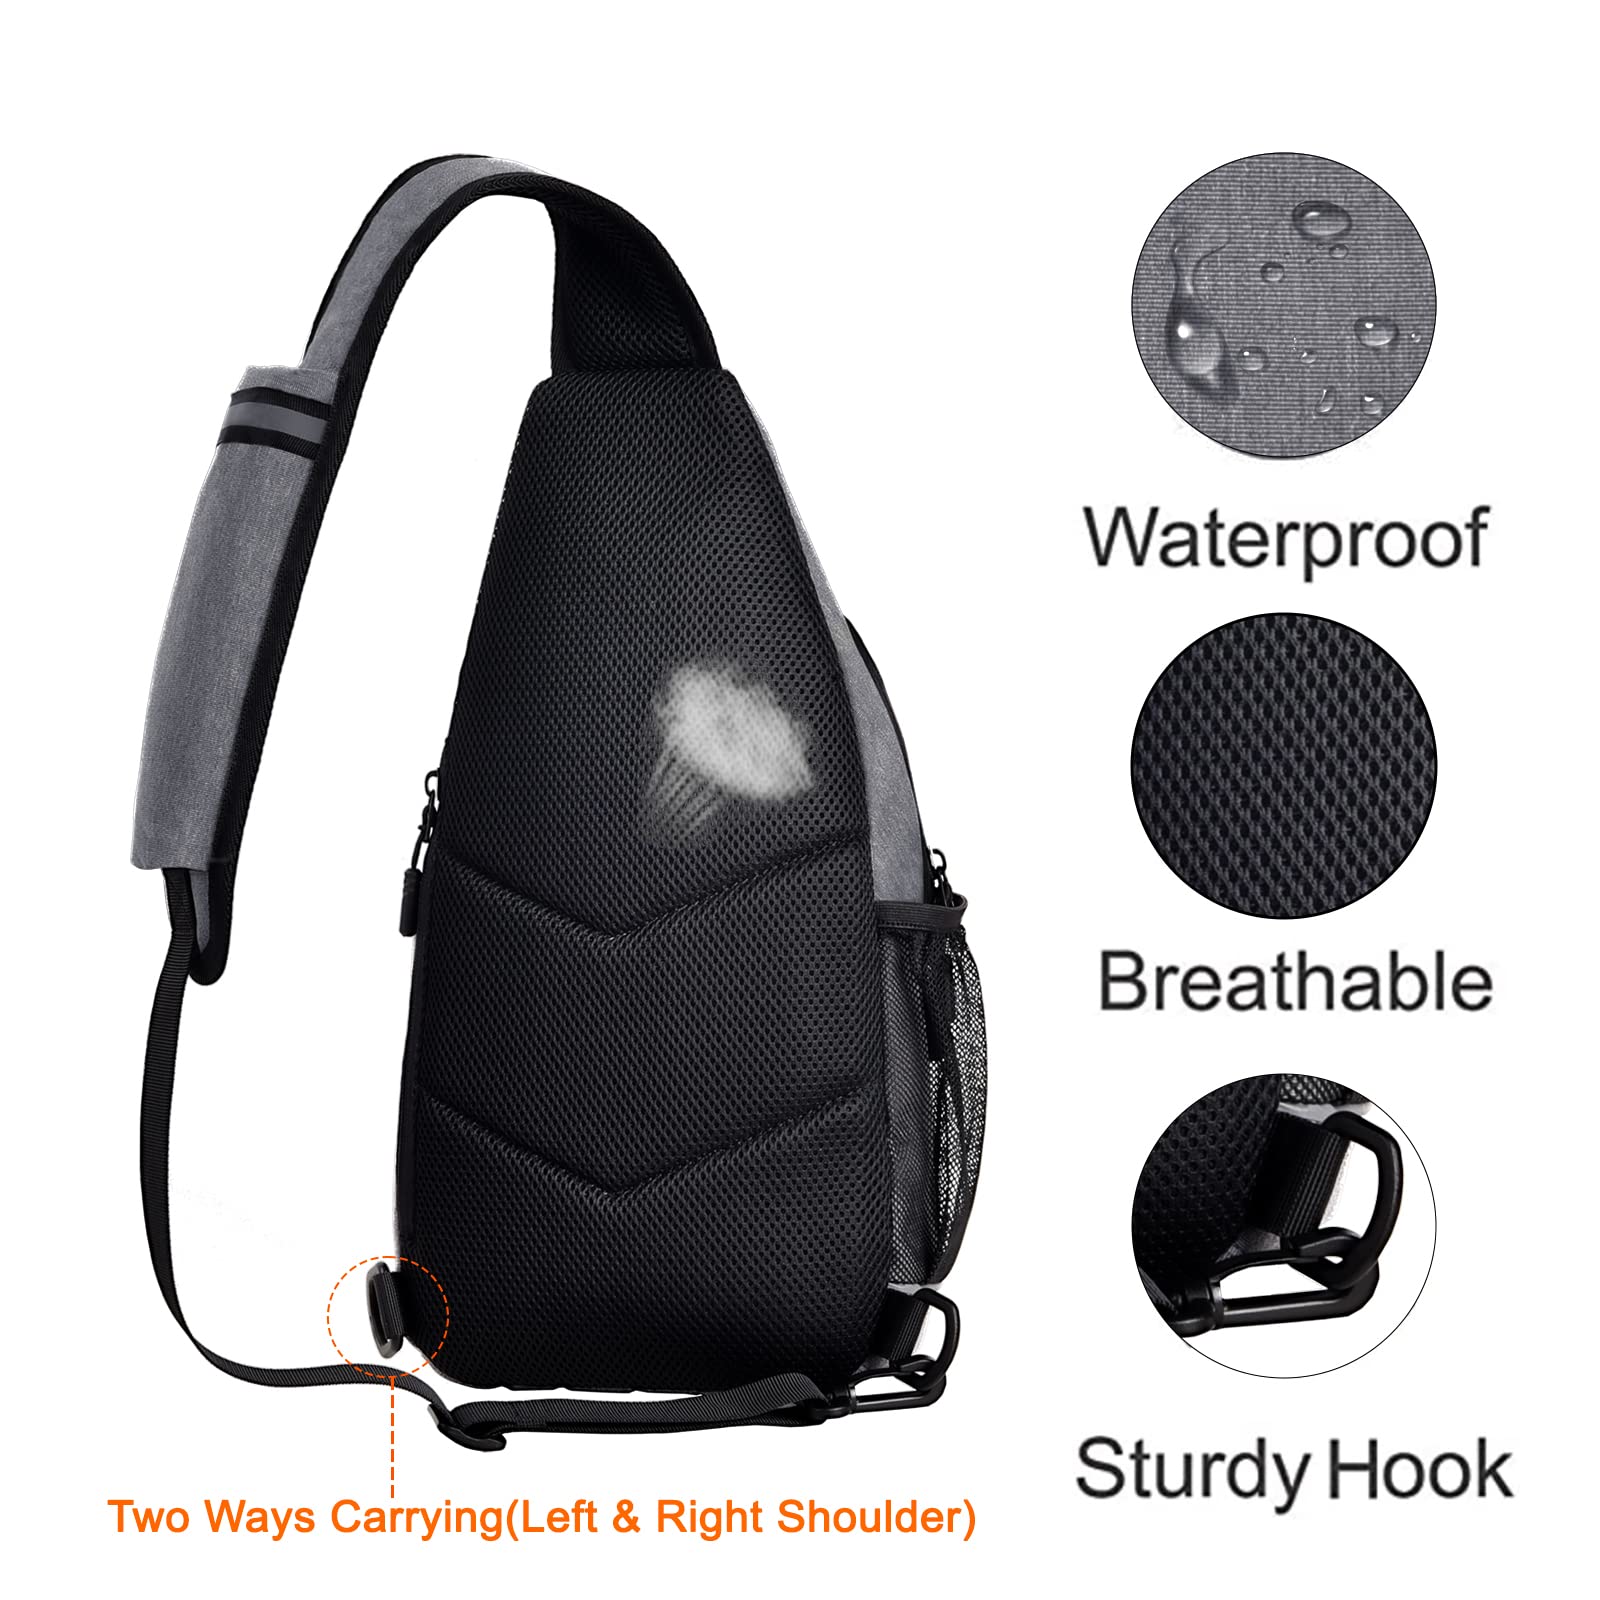 MOSISO Sling Backpack, Crossbody Shoulder Chest Bag Travel Hiking Daypack with Vertical Zipper Pocket&Reflective Strip, Grey